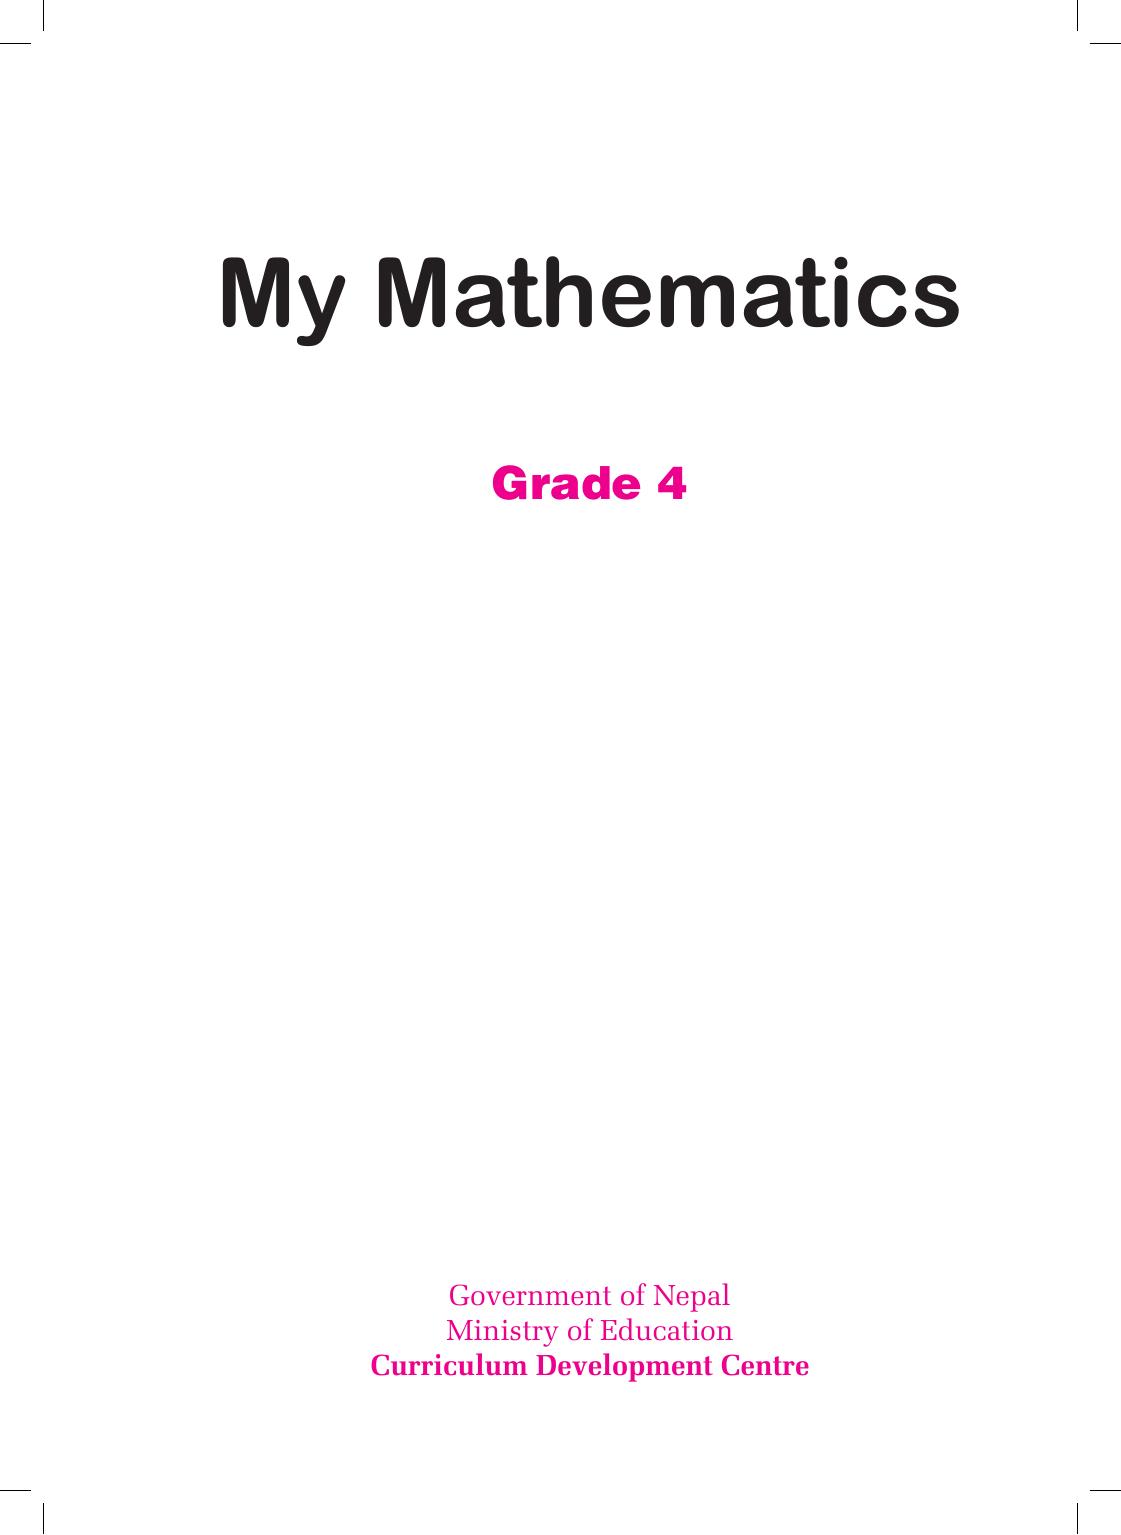 CDC 2018 - My Mathematics Grade 4